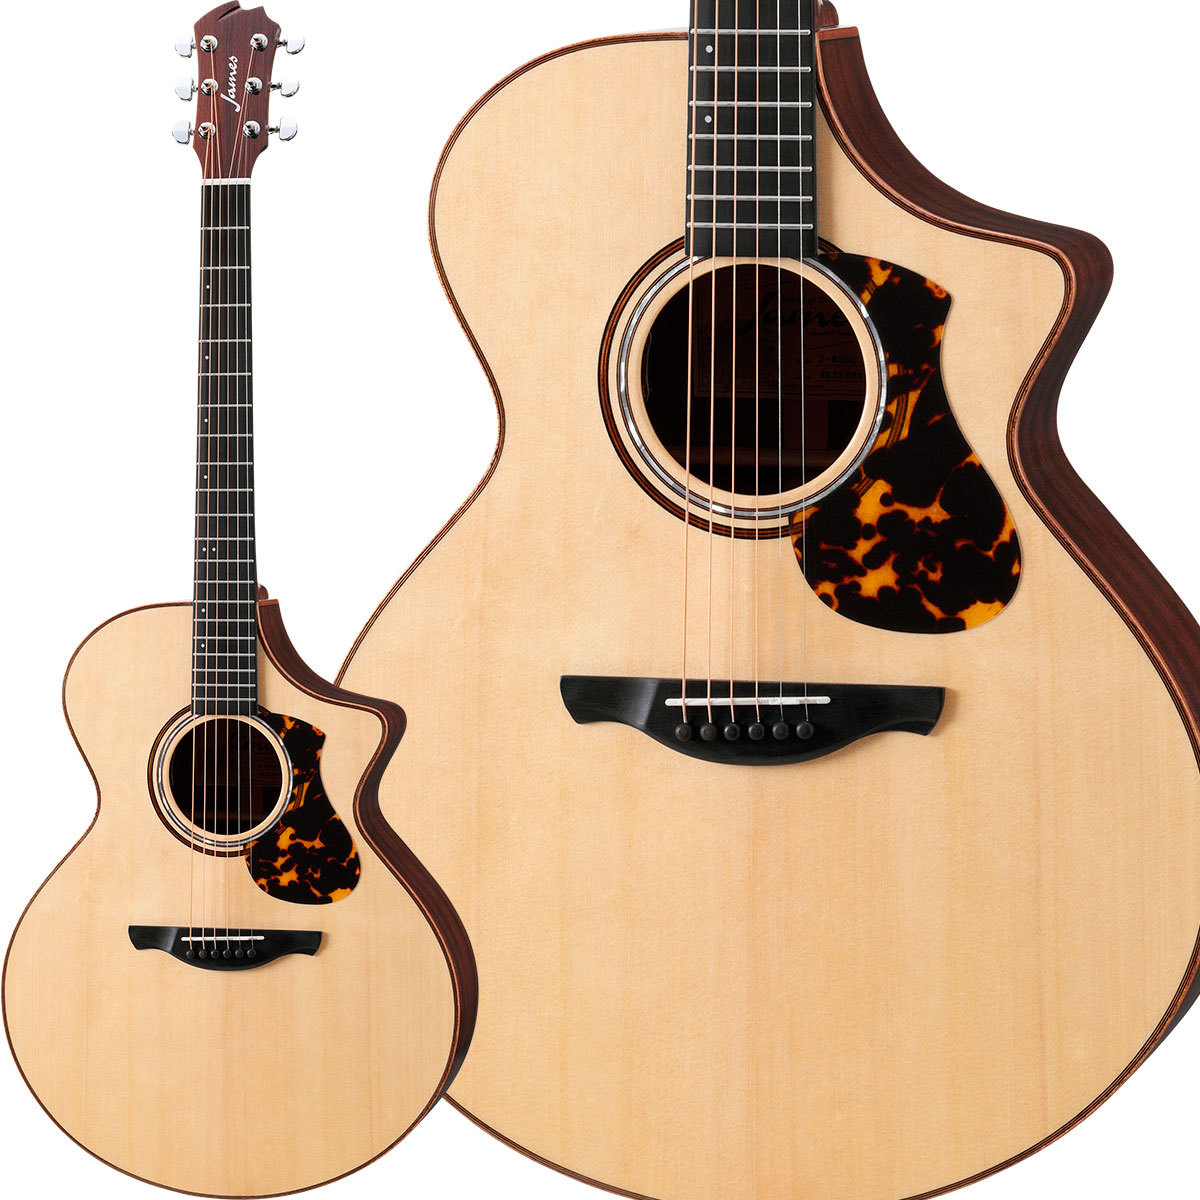 James オール単板ミニギター JB400GT/TS43mm - jkc78.com